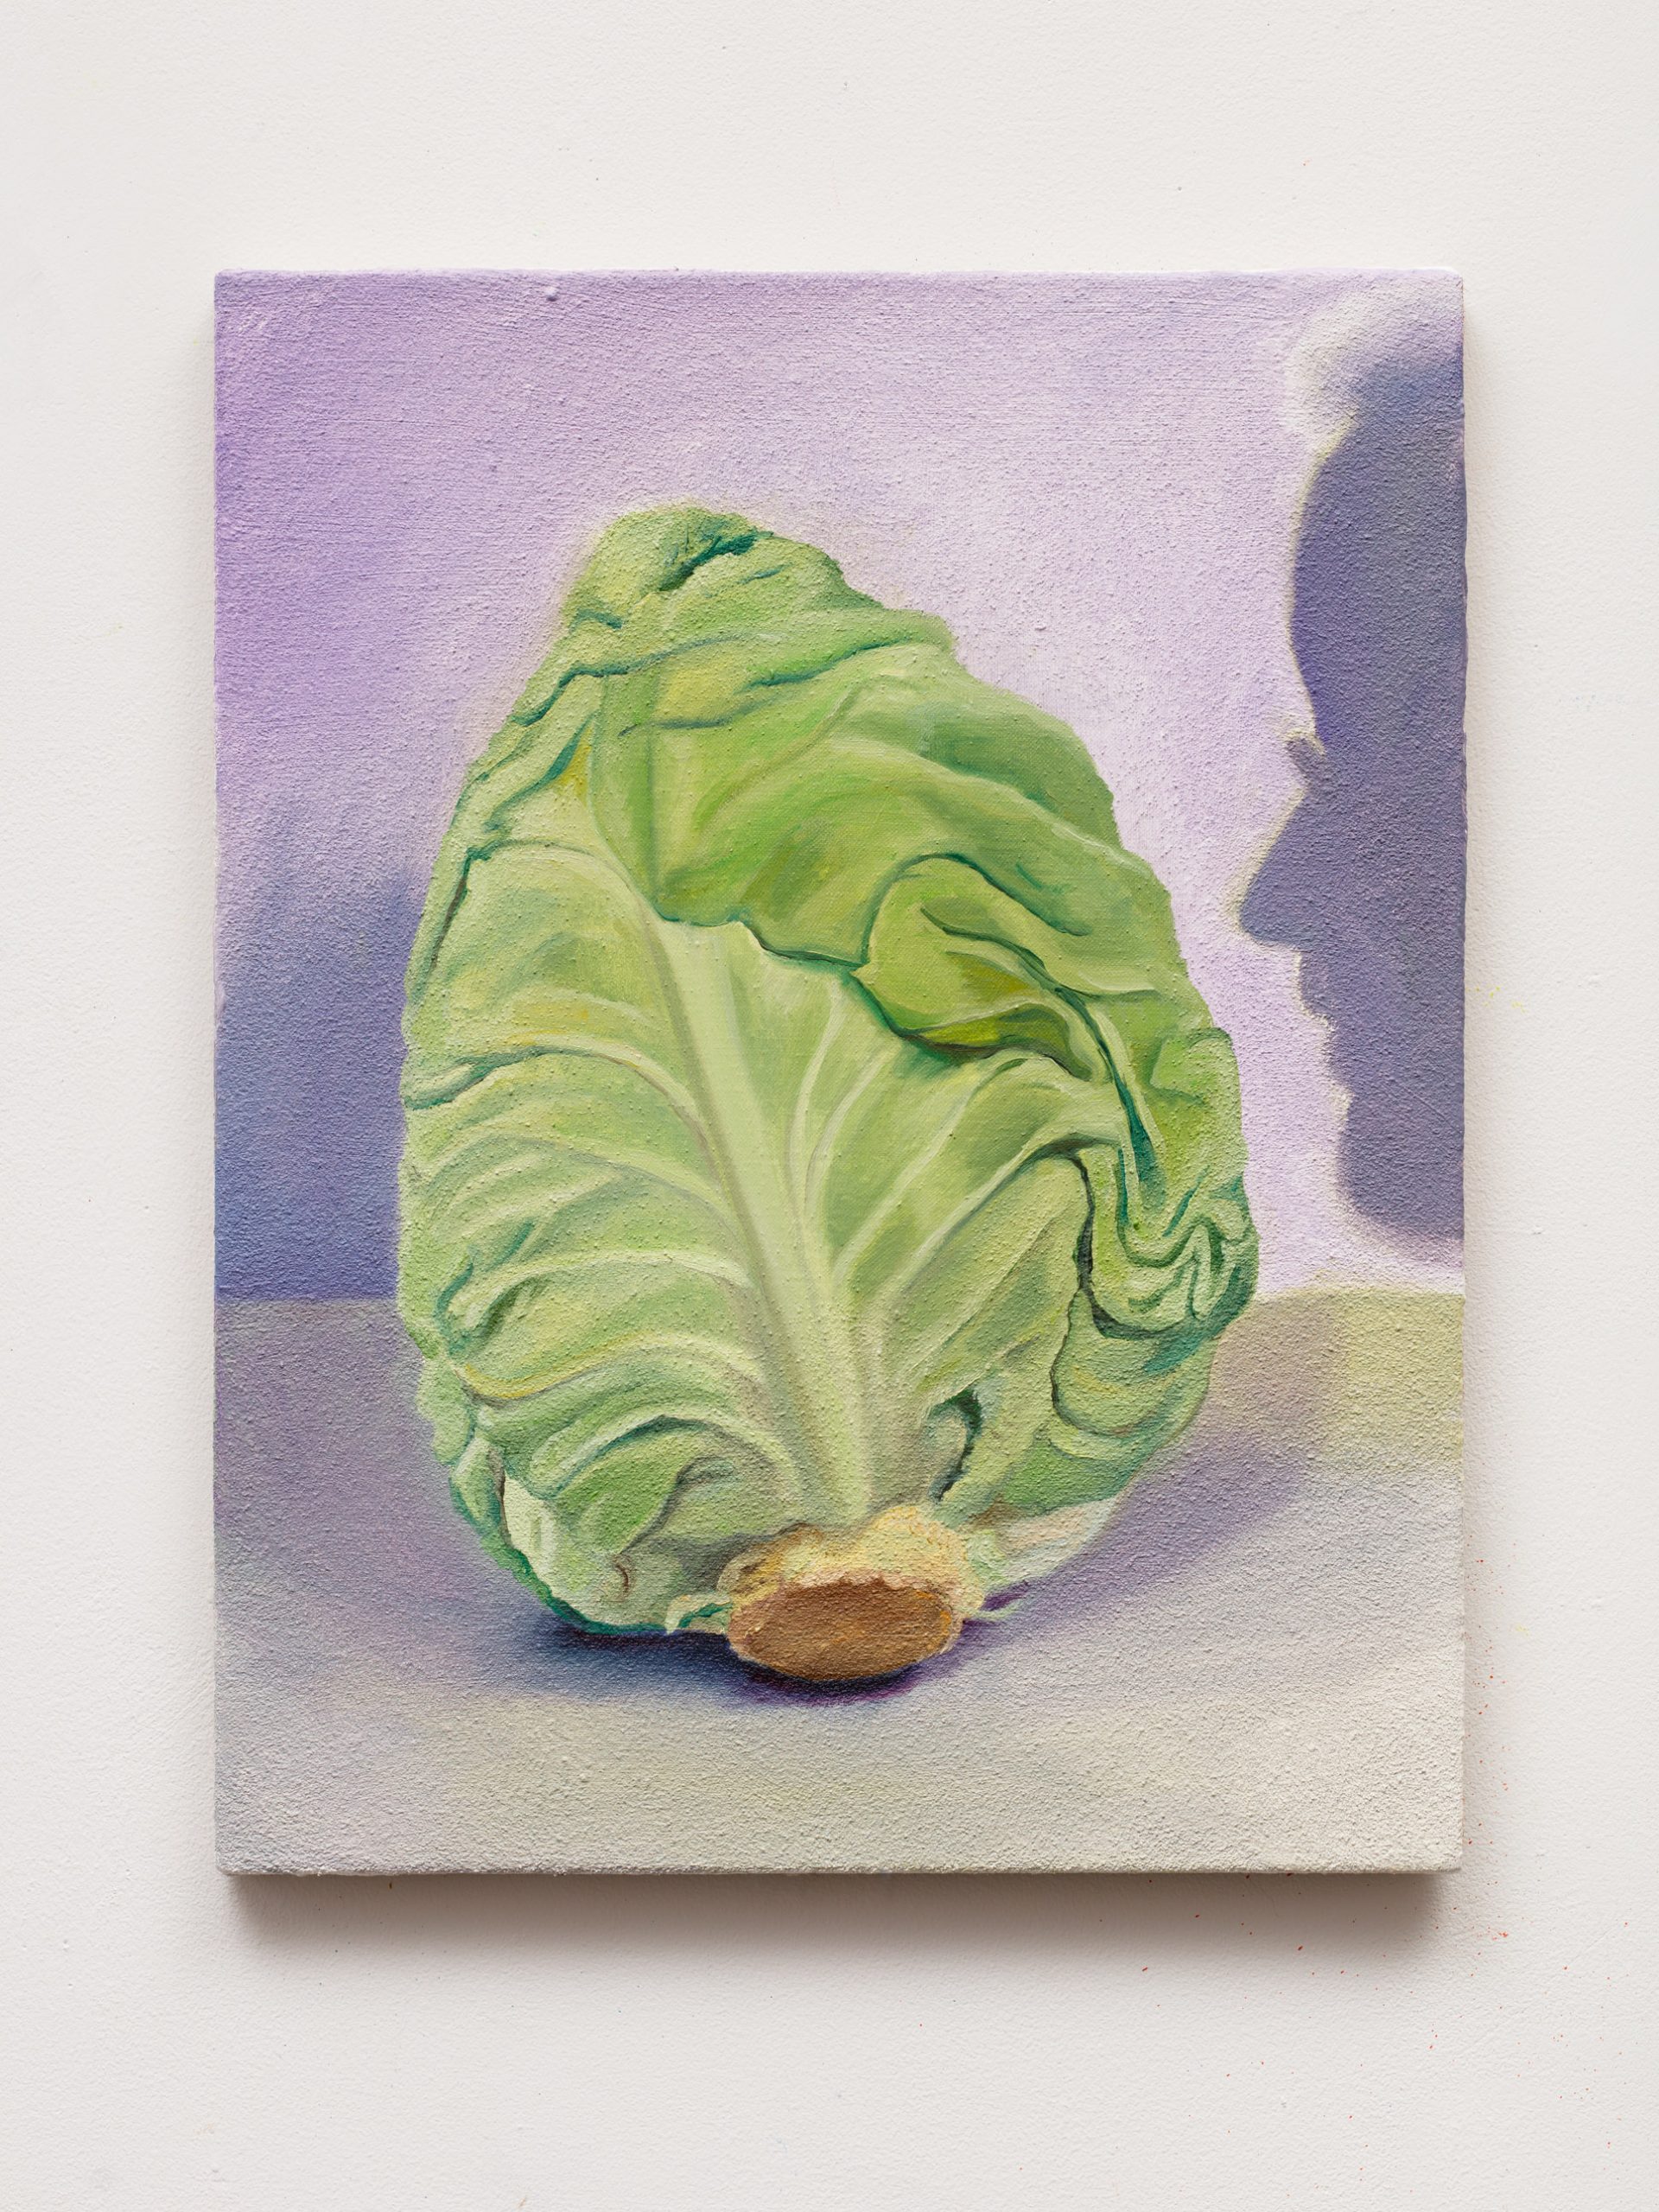 Allison Katz, Cabbage (and Philip) No. 25, 2020